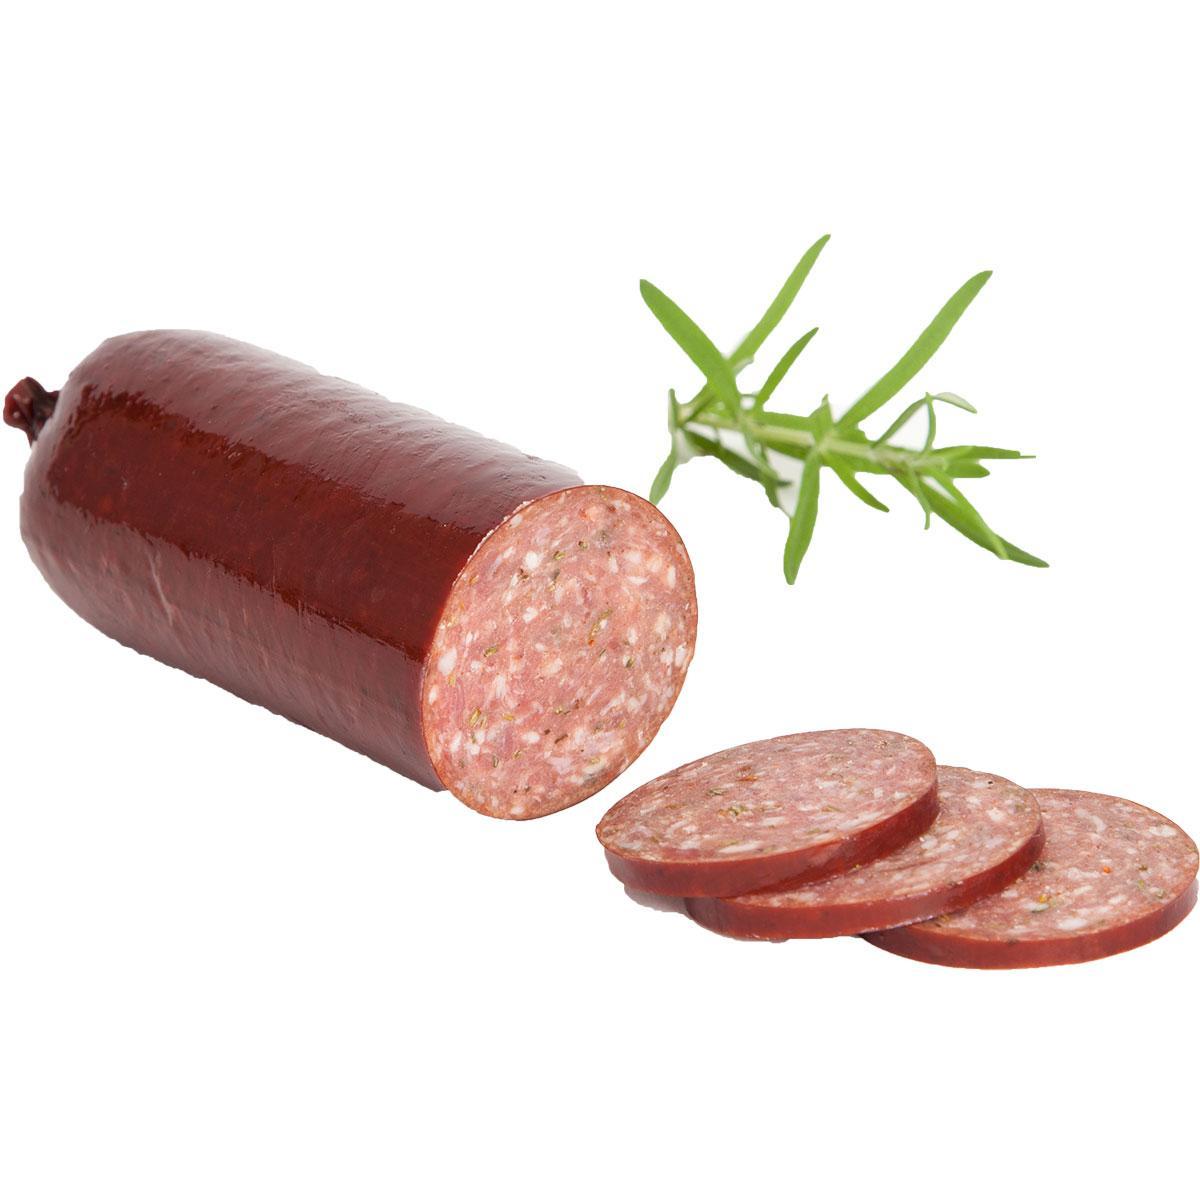 Lamb sausage